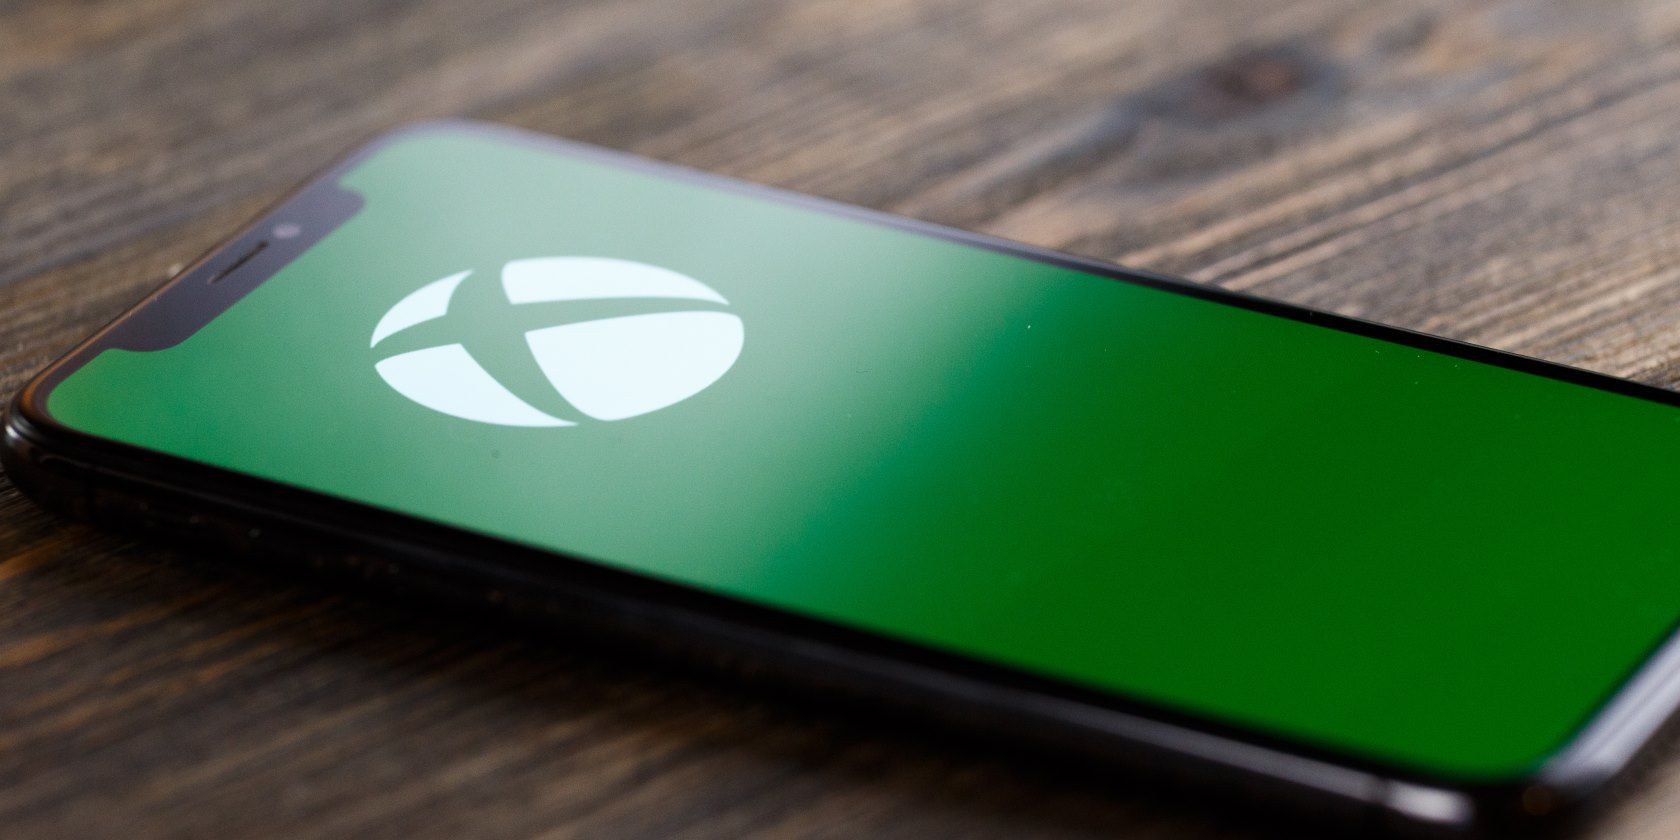 the Xbox logo on a phone